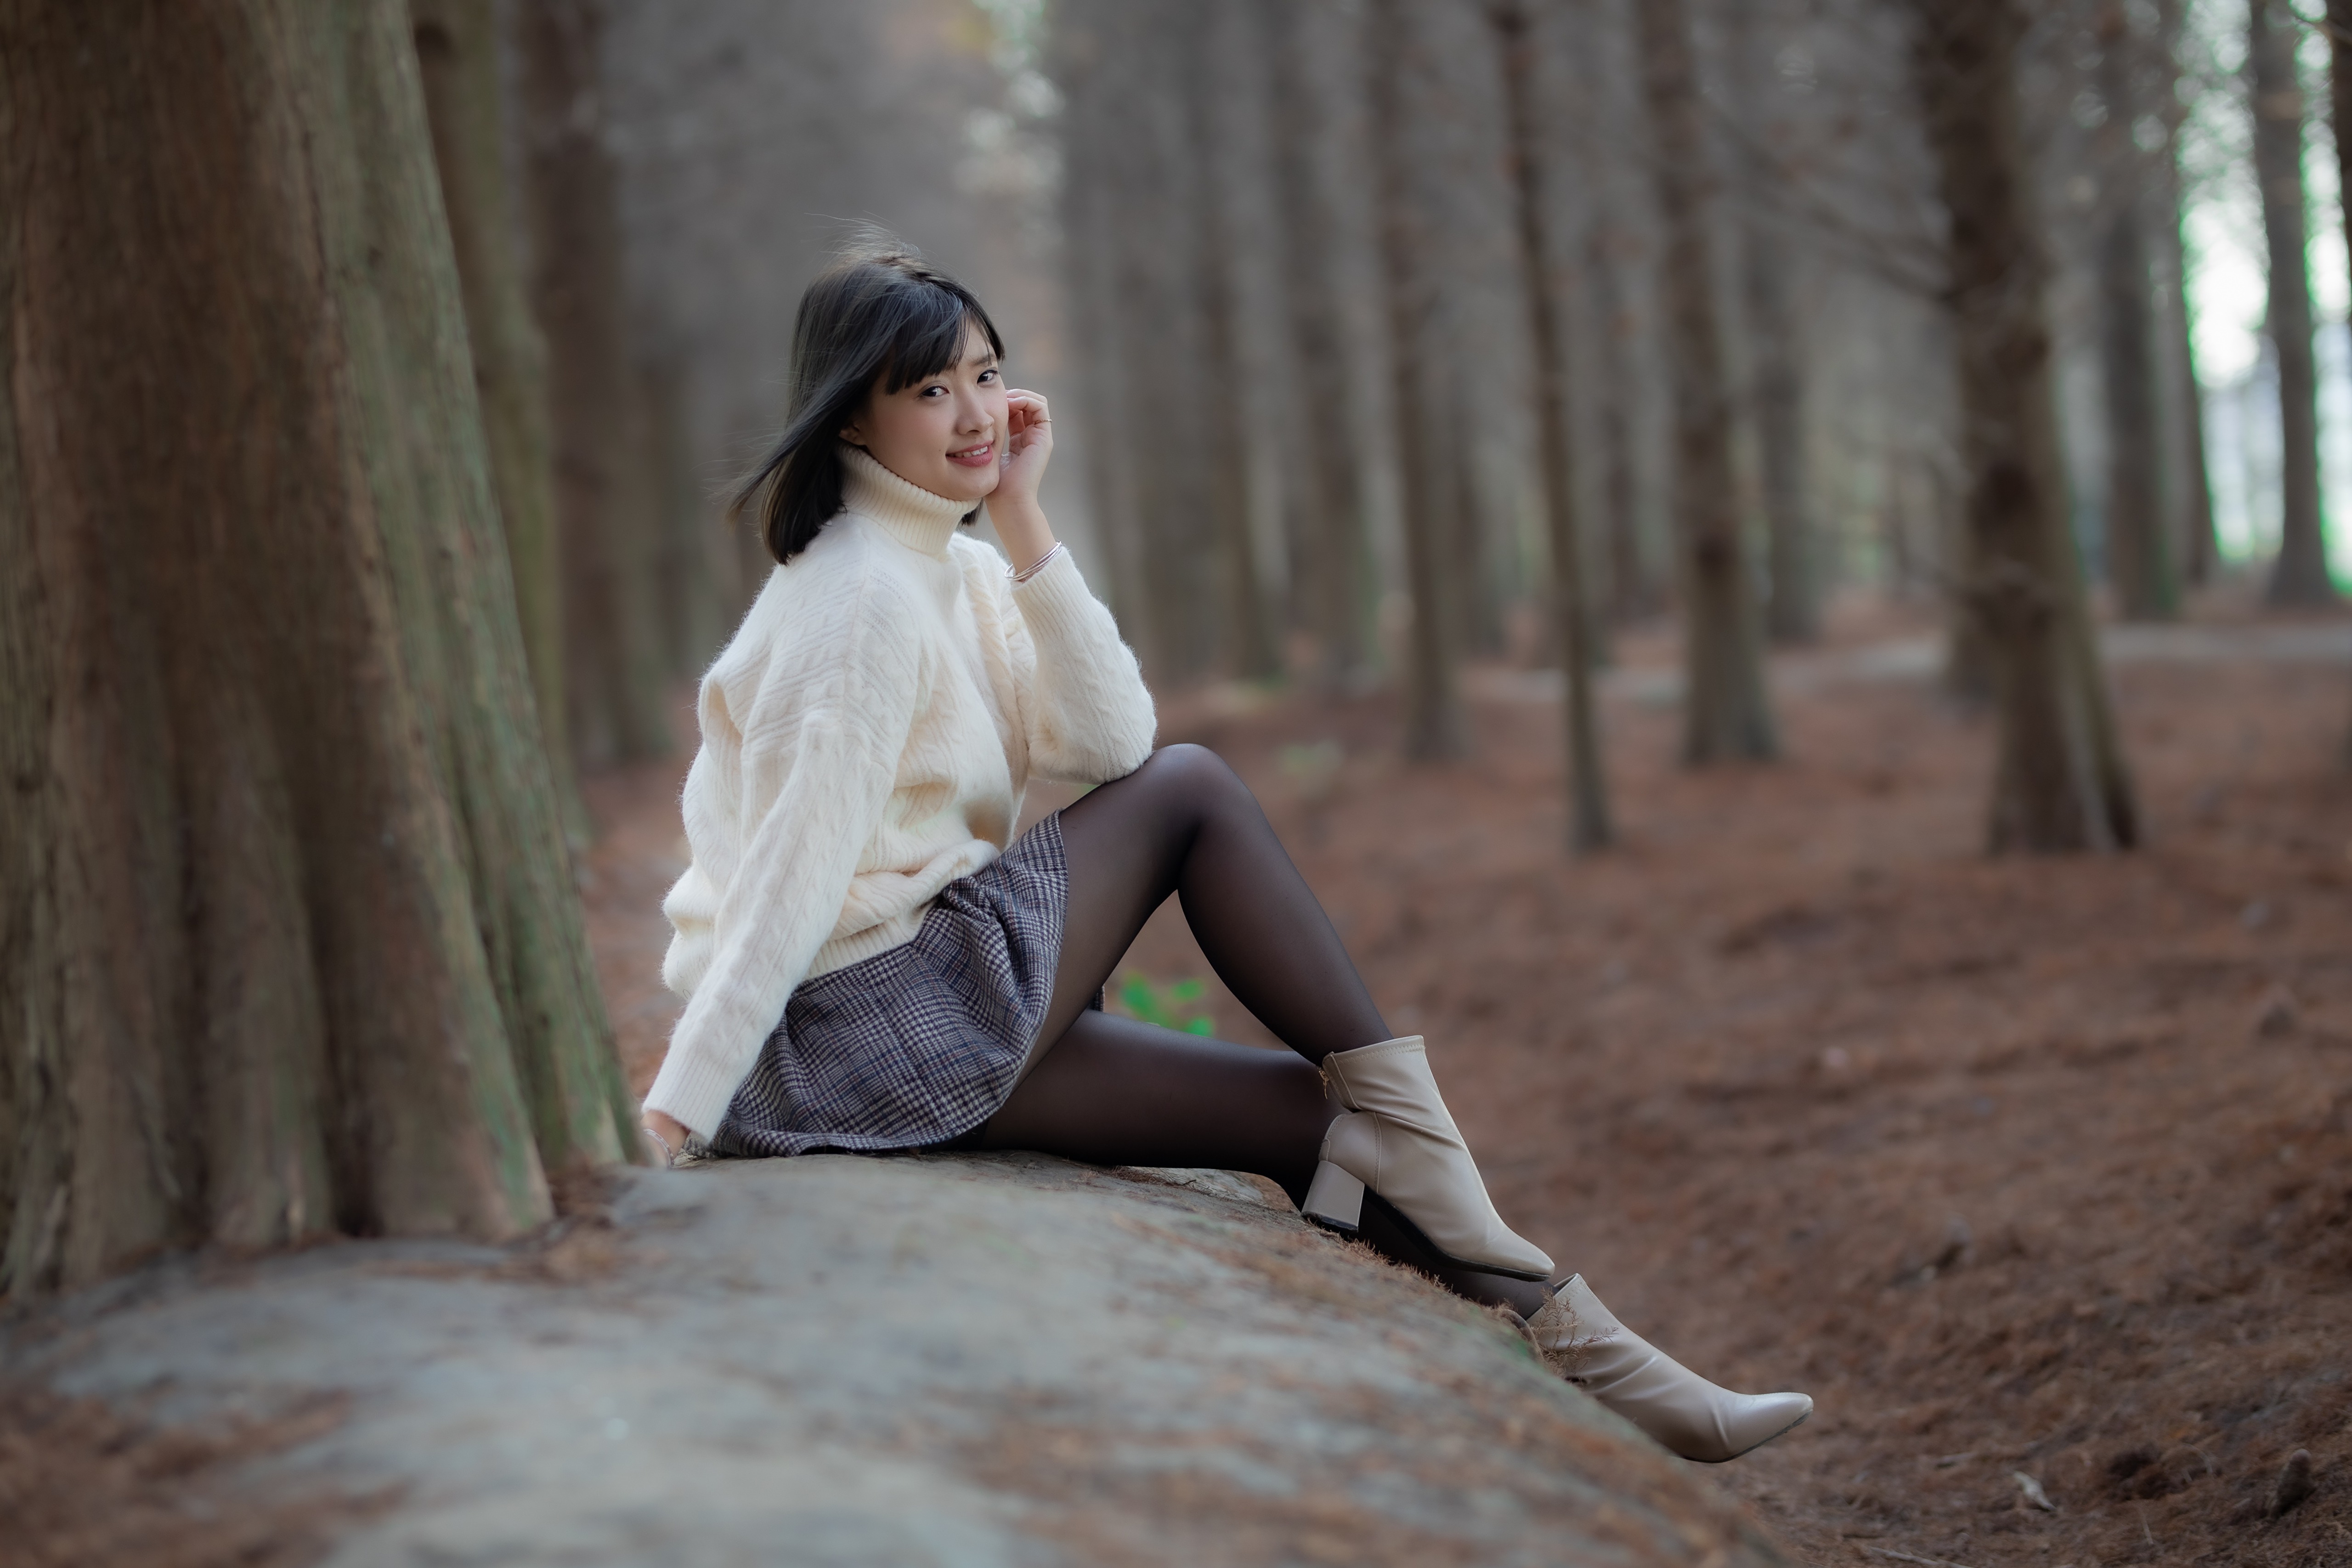 Asian Model Women Short Hair Dark Hair Forest Trees Sitting Depth Of Field Ankle Boots Pullover Skir 5120x3413